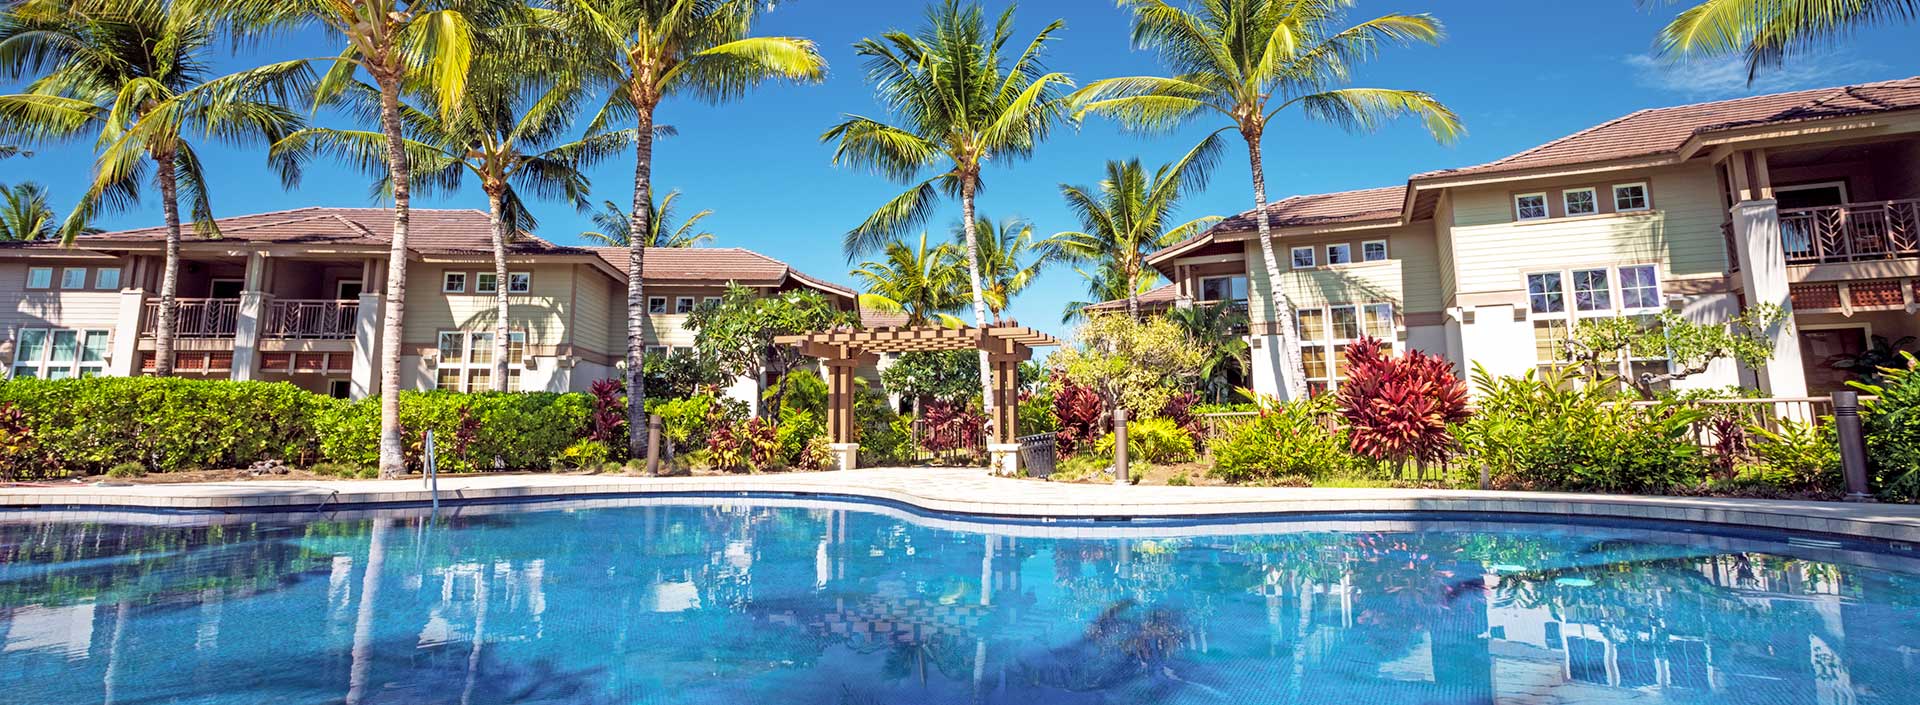 Swimming Pool at Waikoloa Colony Villas